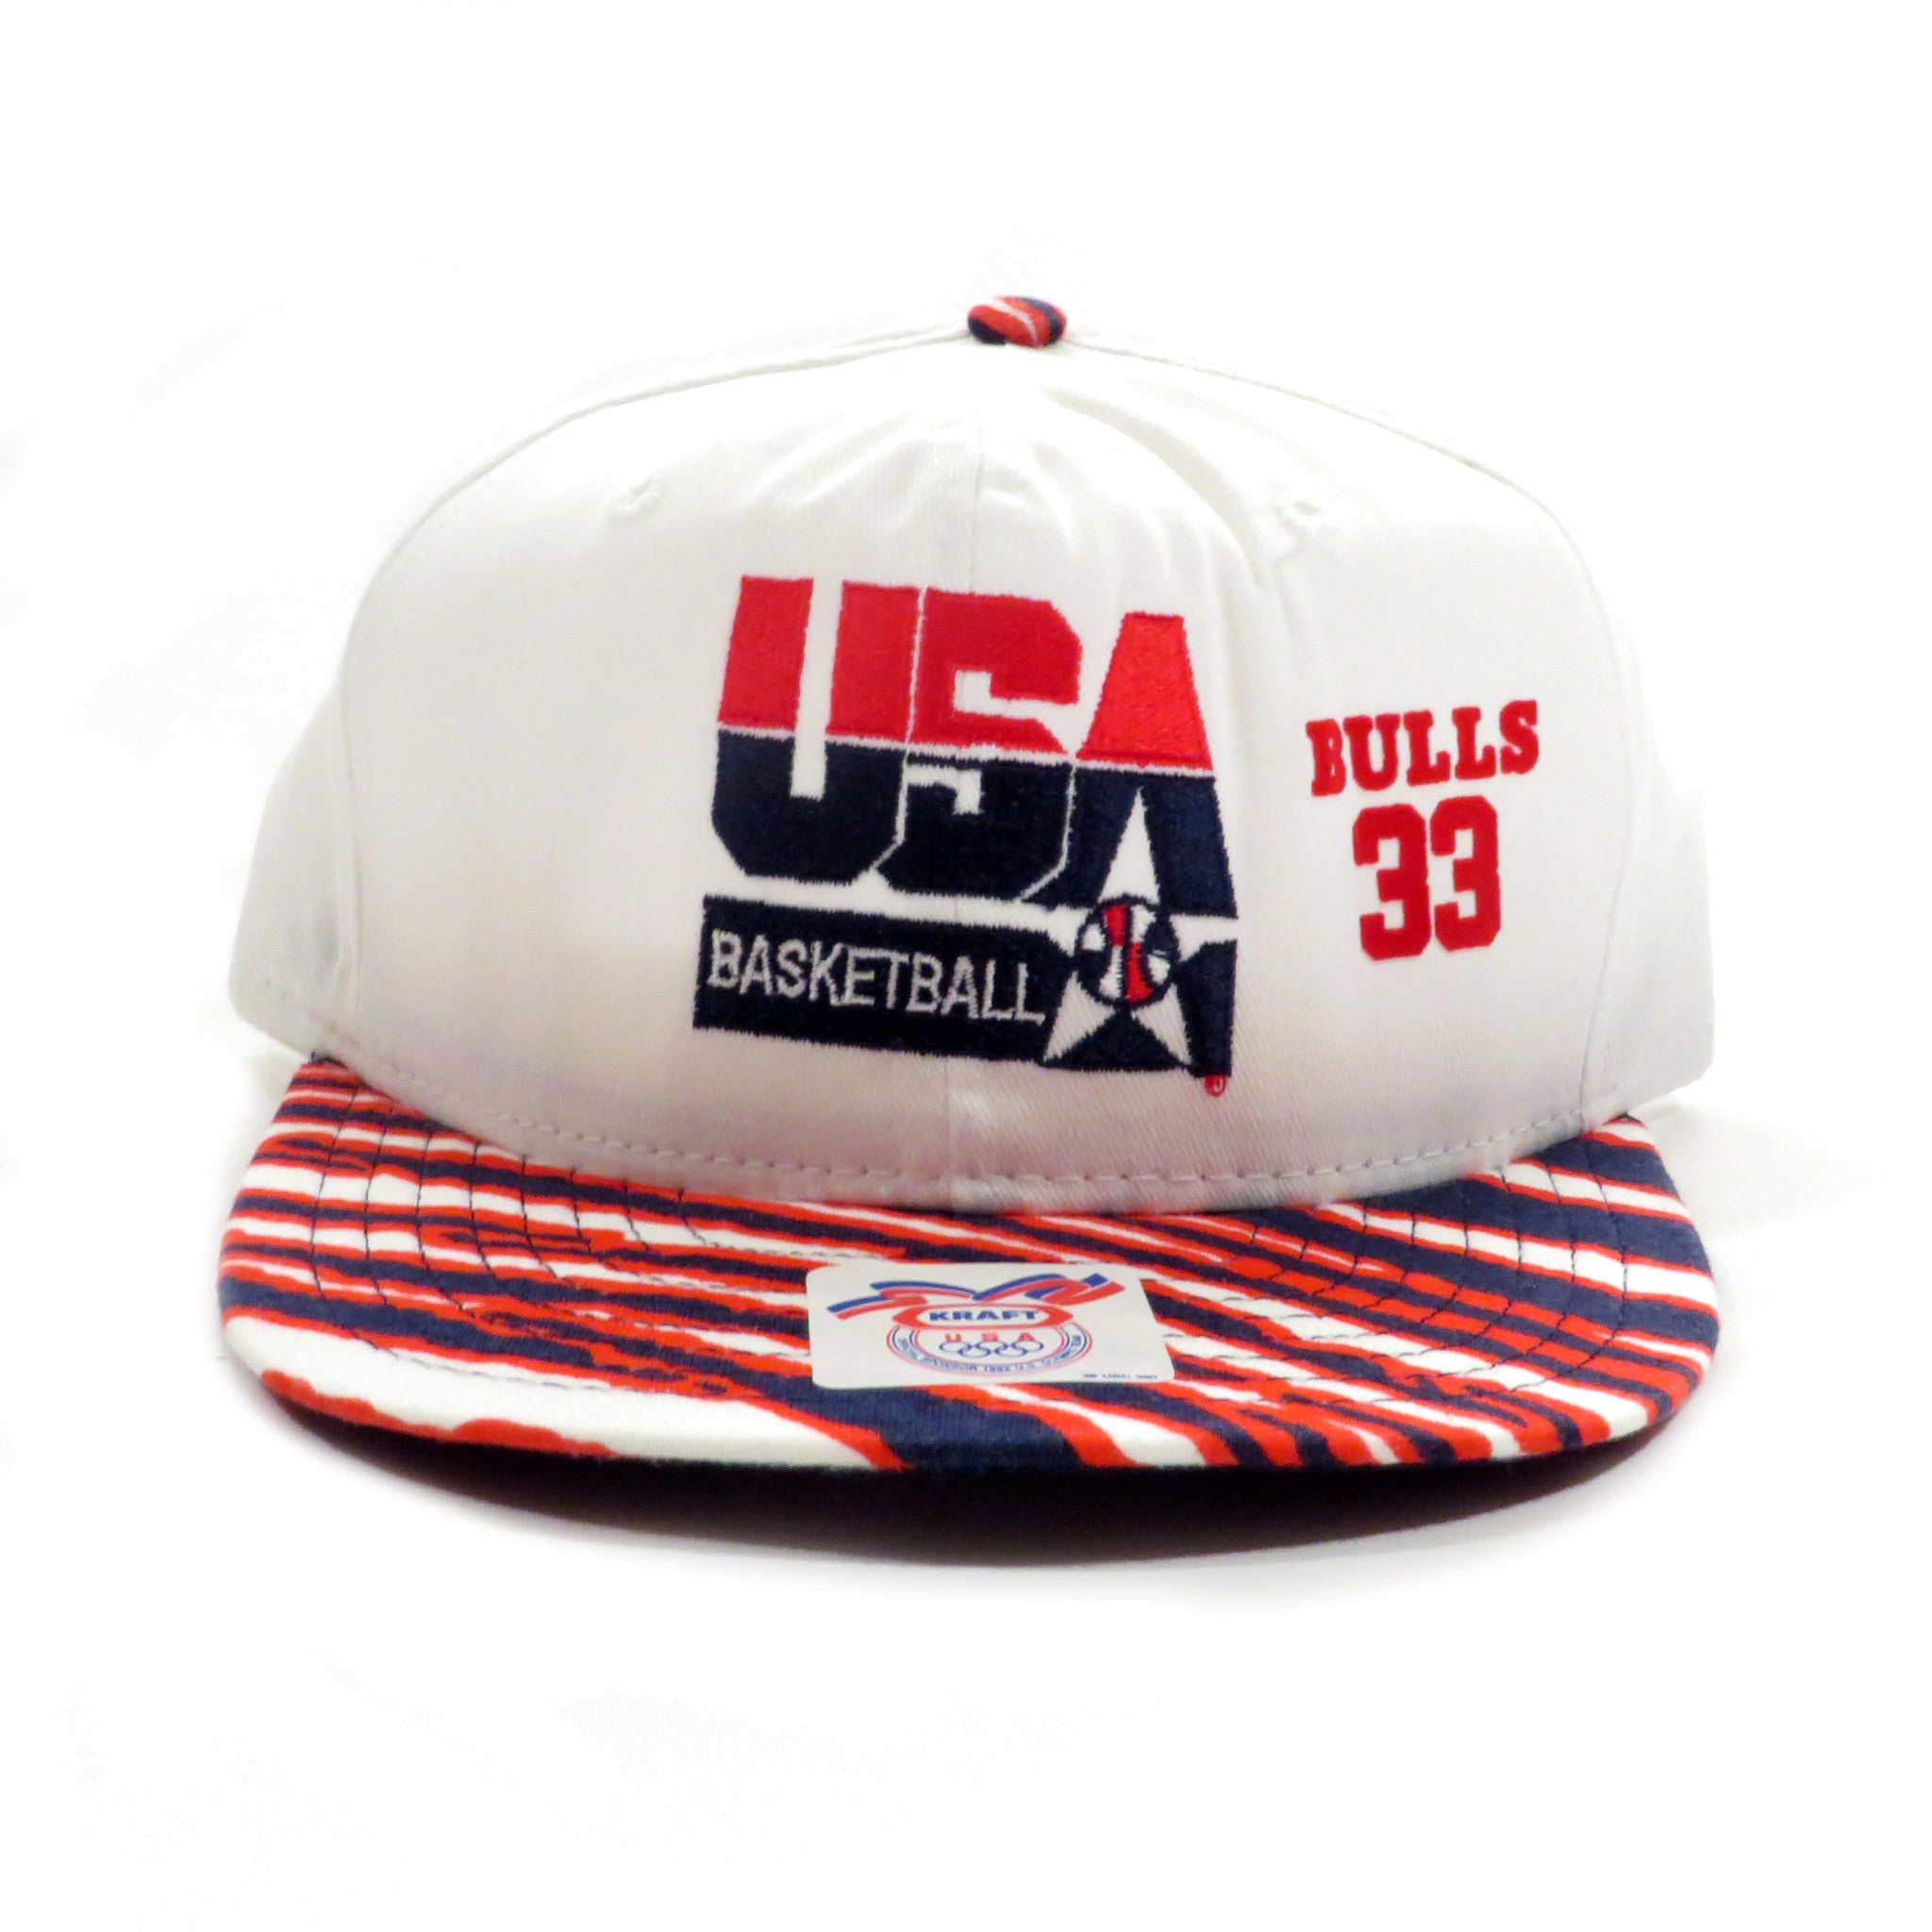 USA Basketball Pippen 33 Bulls Zubaz Snapback Hat